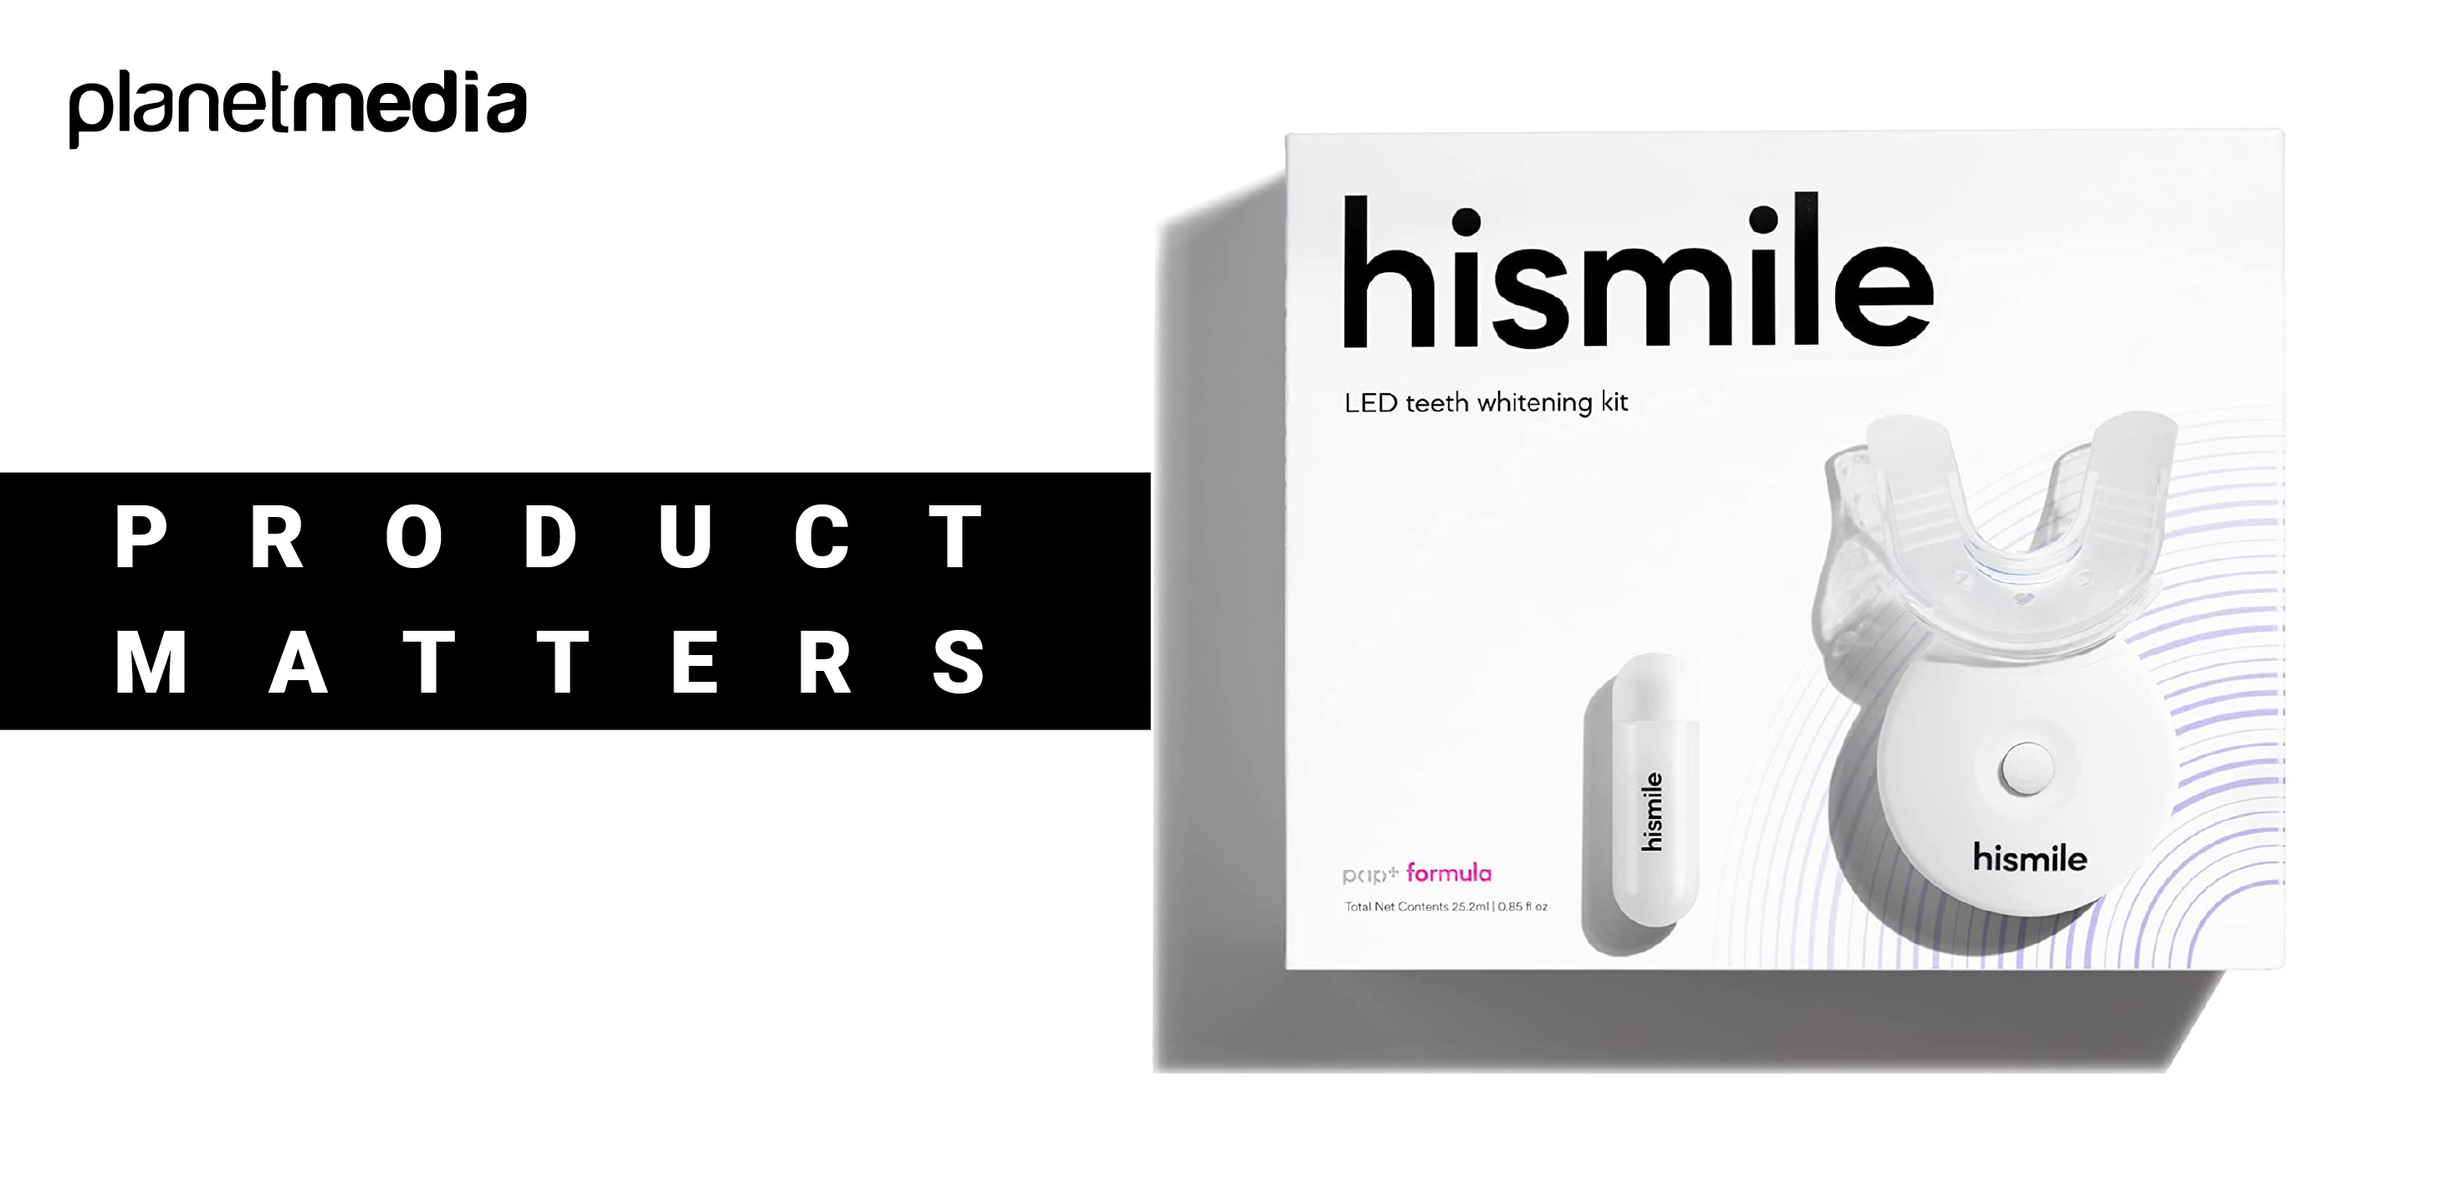 HiSmile: Revolutionising Whitening Their Marketing Approach